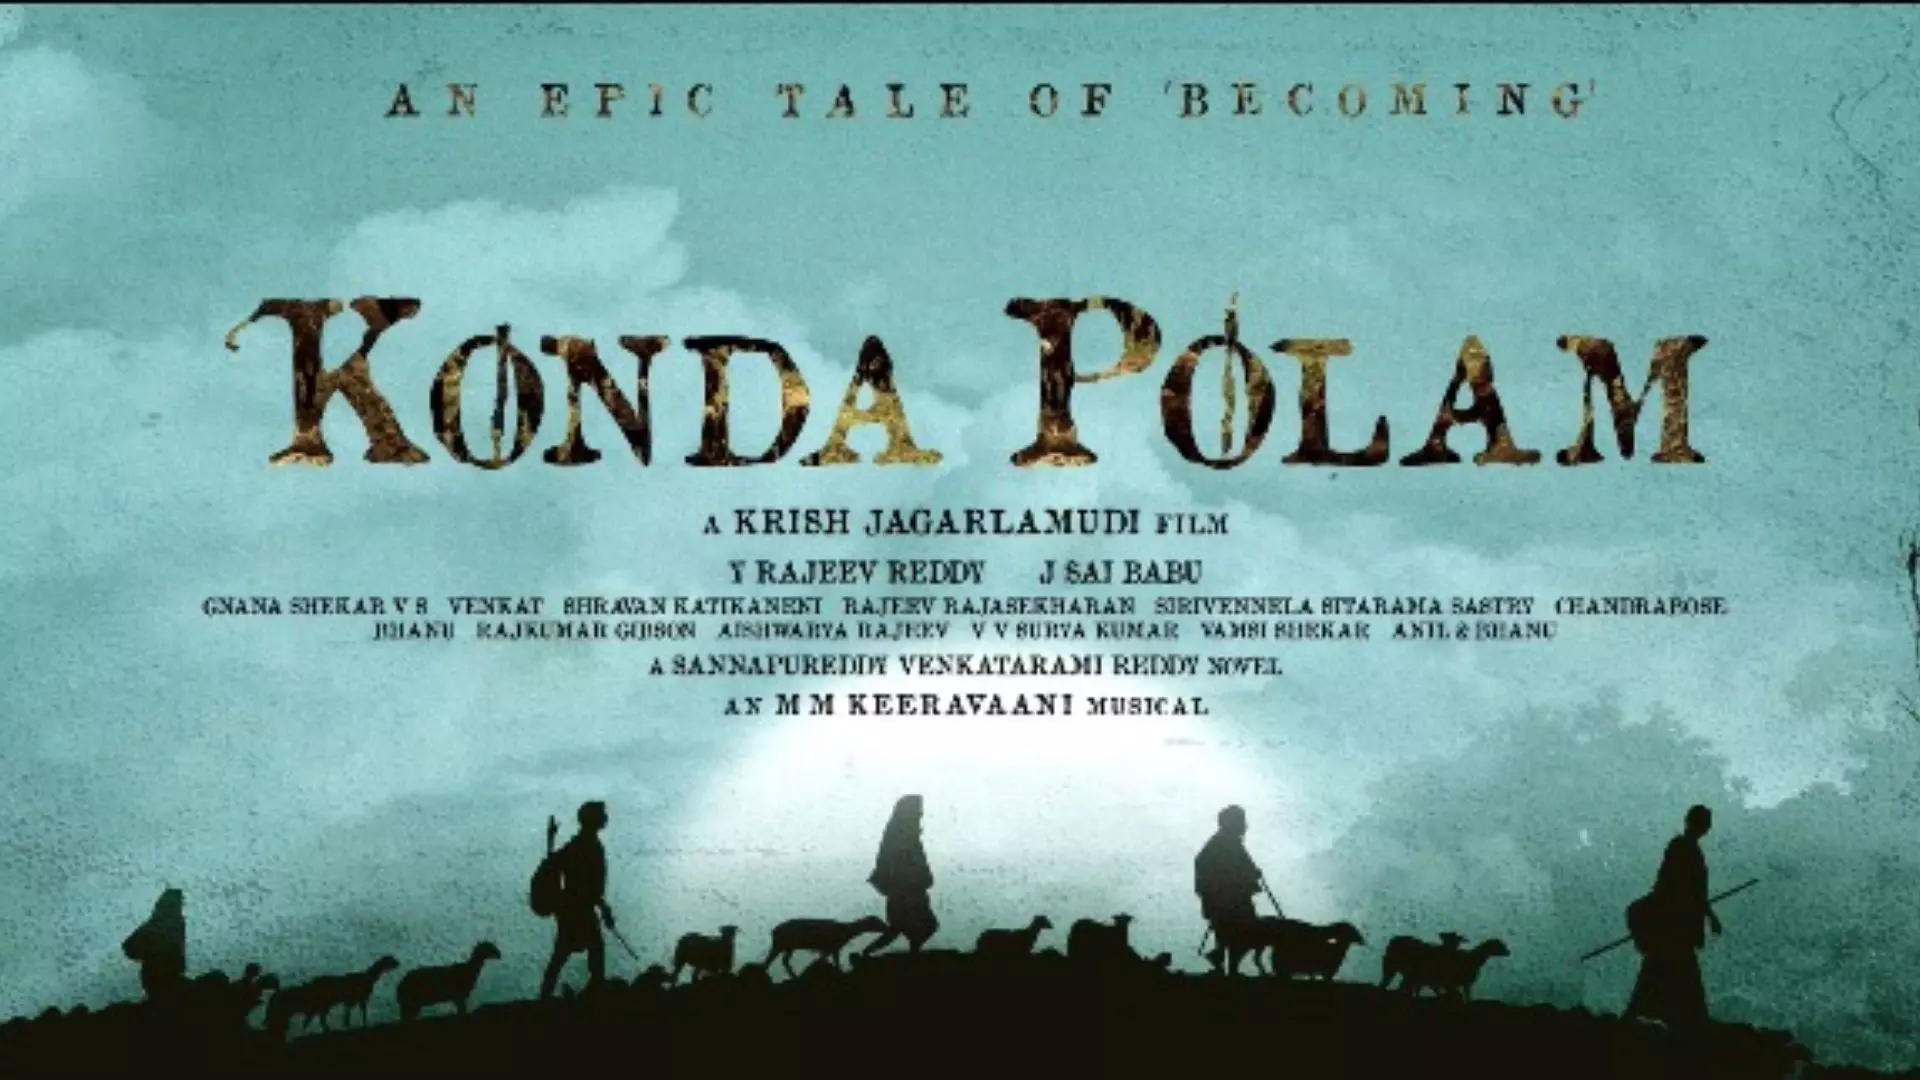 Vaishnav Tej Rakul Preeth Konda Polam Movie First Song to be Out Today 27th August 2021